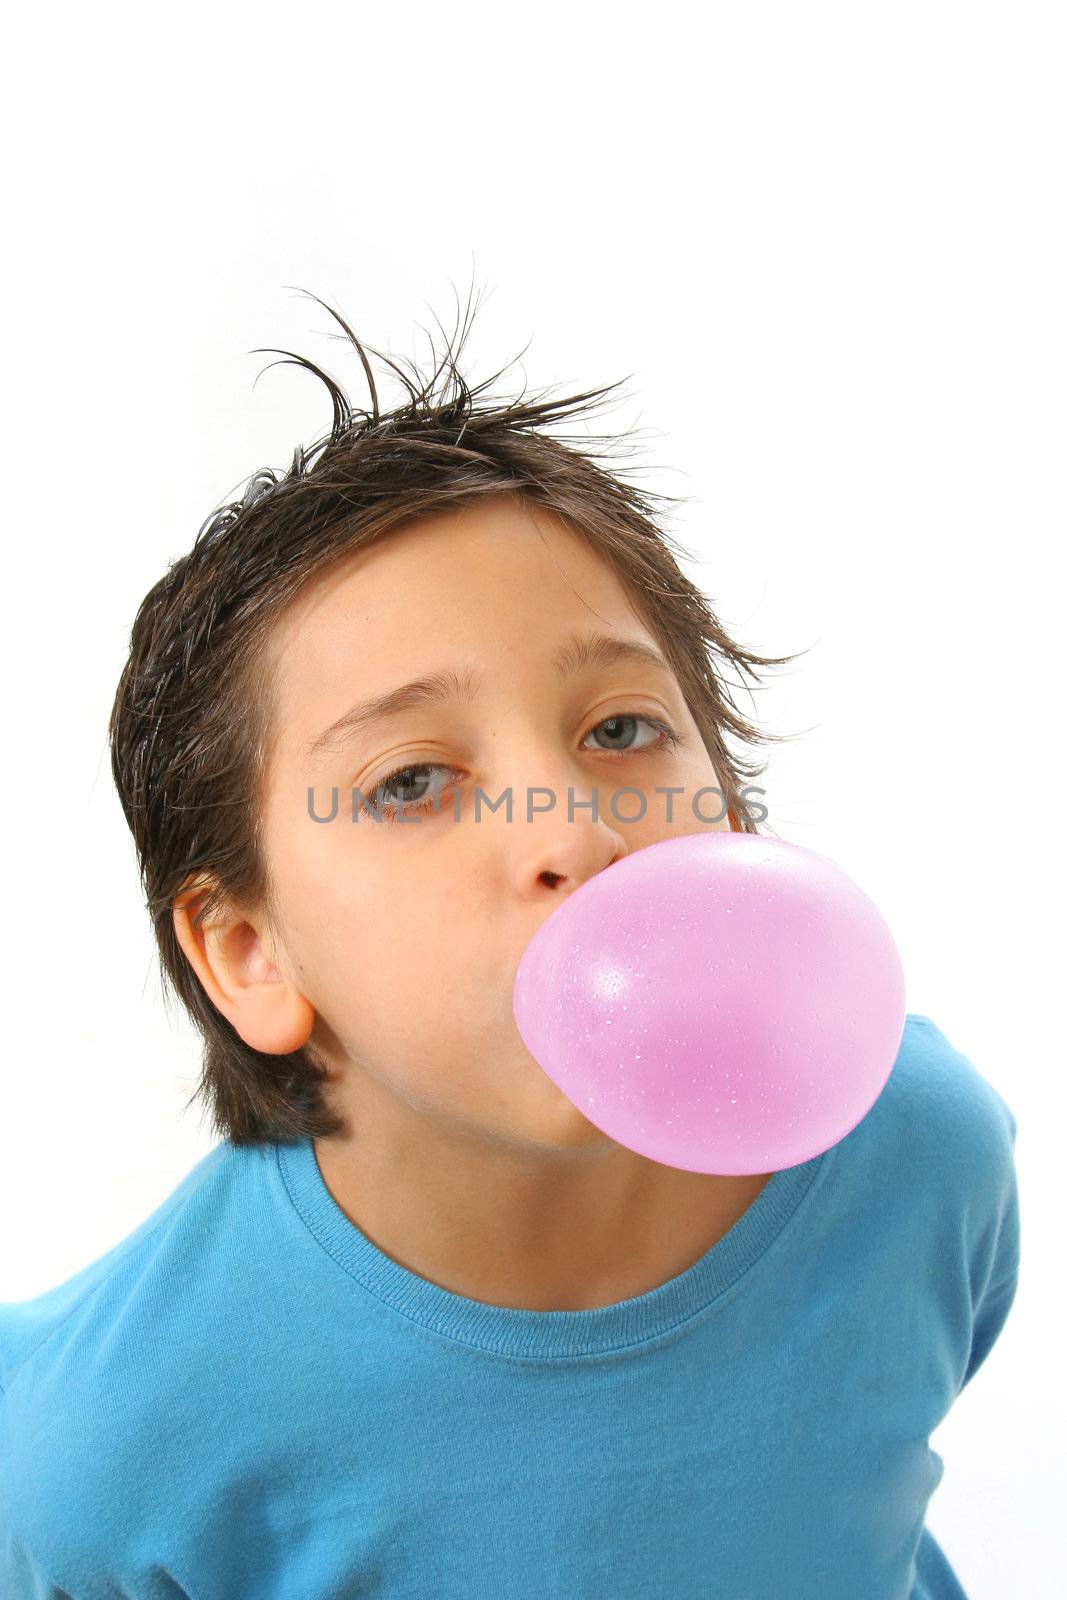 Boy blowing a pink bubble gum by Erdosain